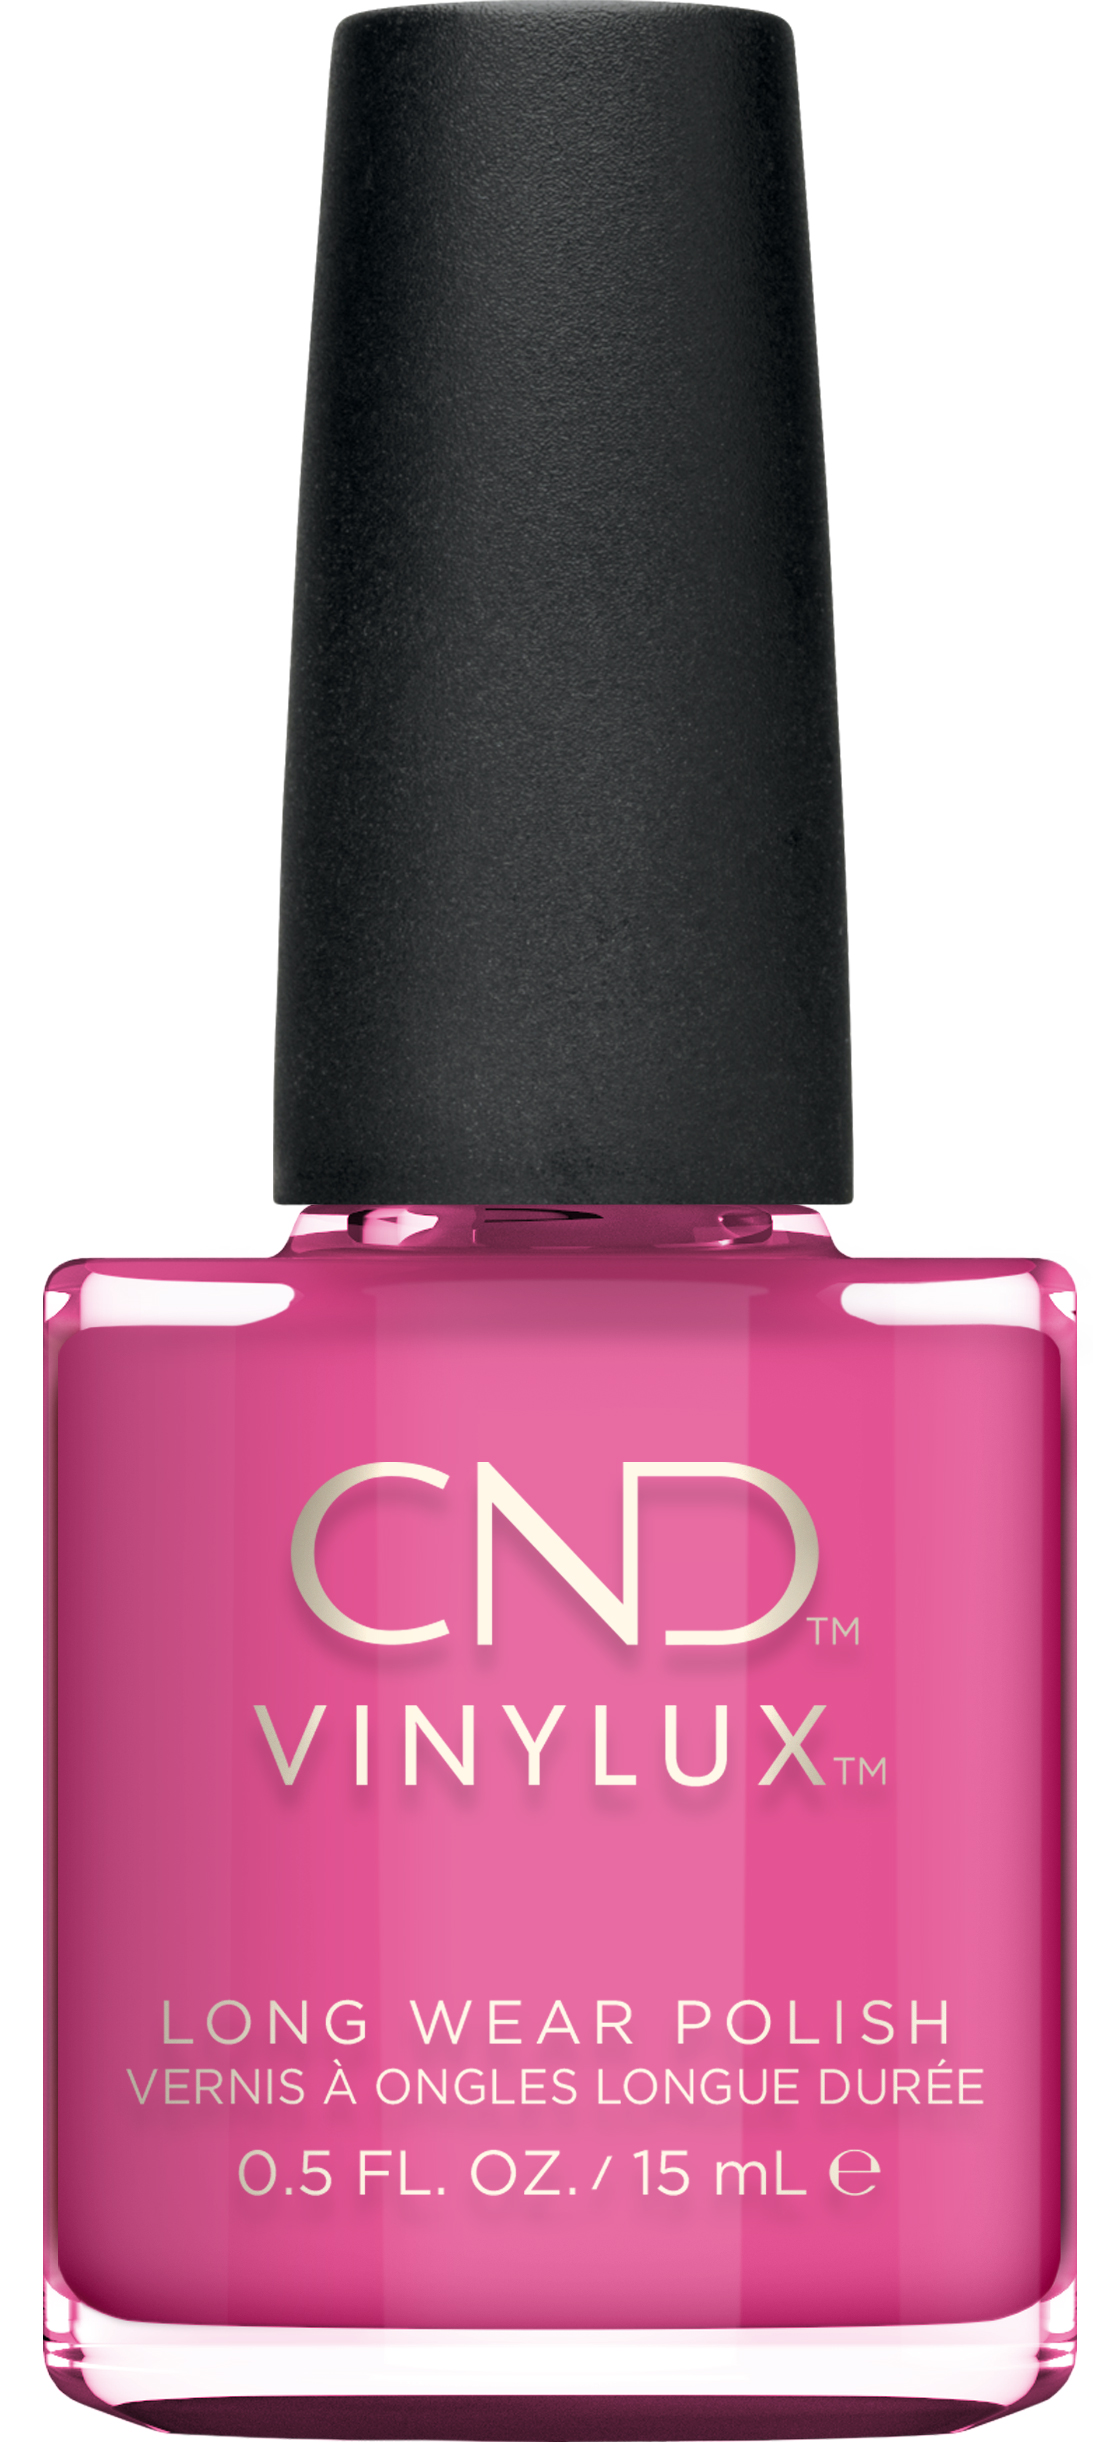 CND Vinylux Neglelak Hot Pop Pink #121 15 ml.